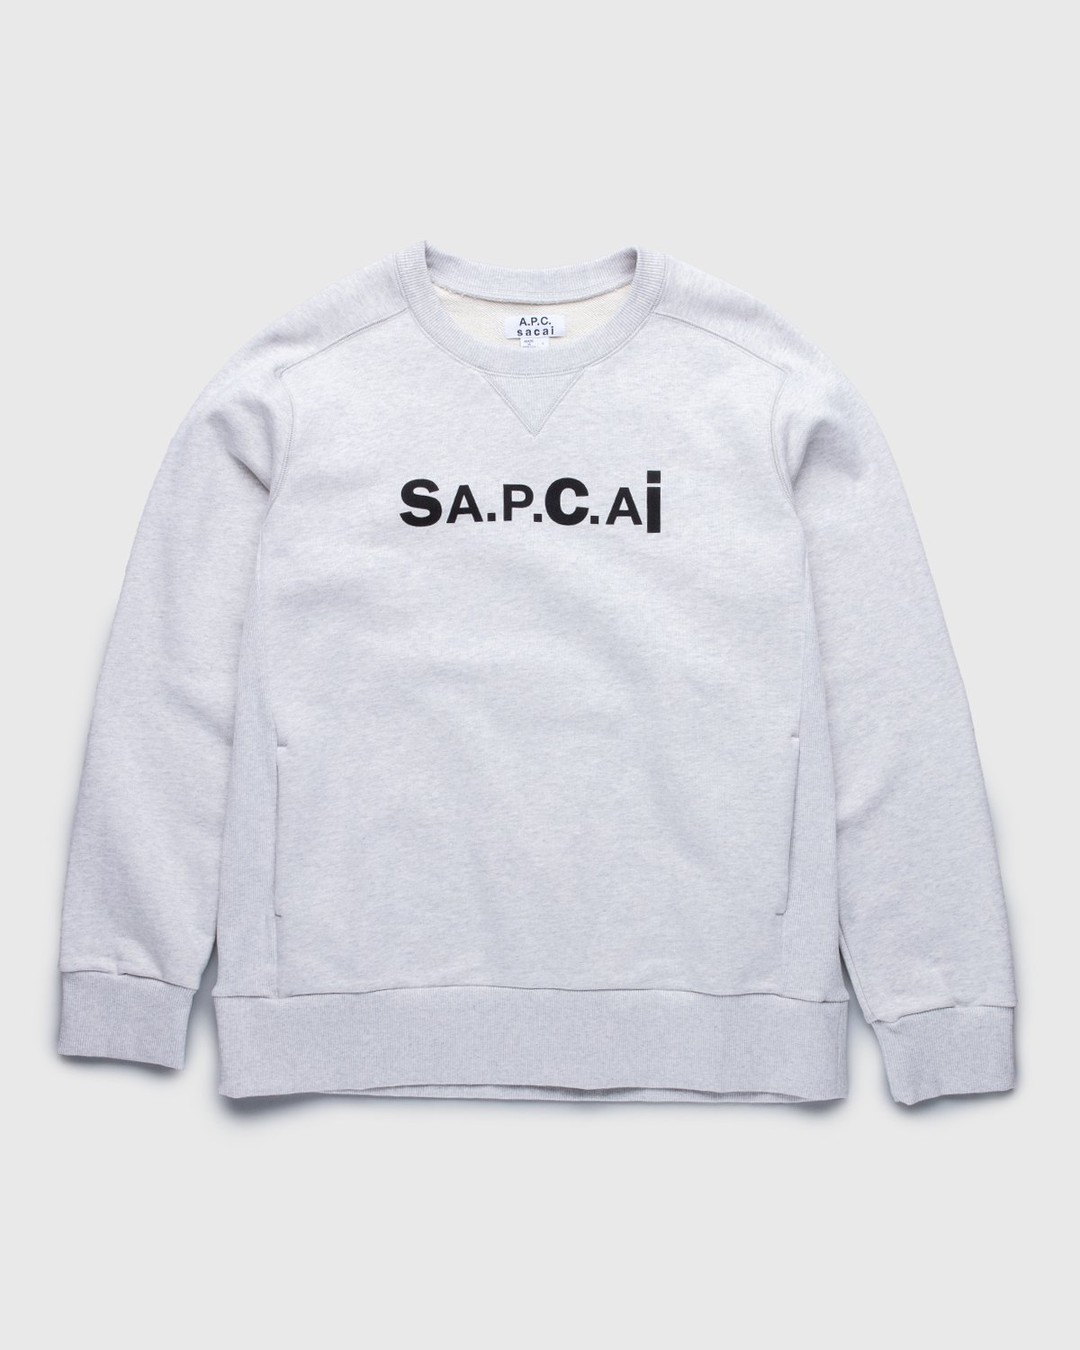 A.P.C. x Sacai – Tani Sweater Light Grey - Sweatshirts - Grey - Image 1